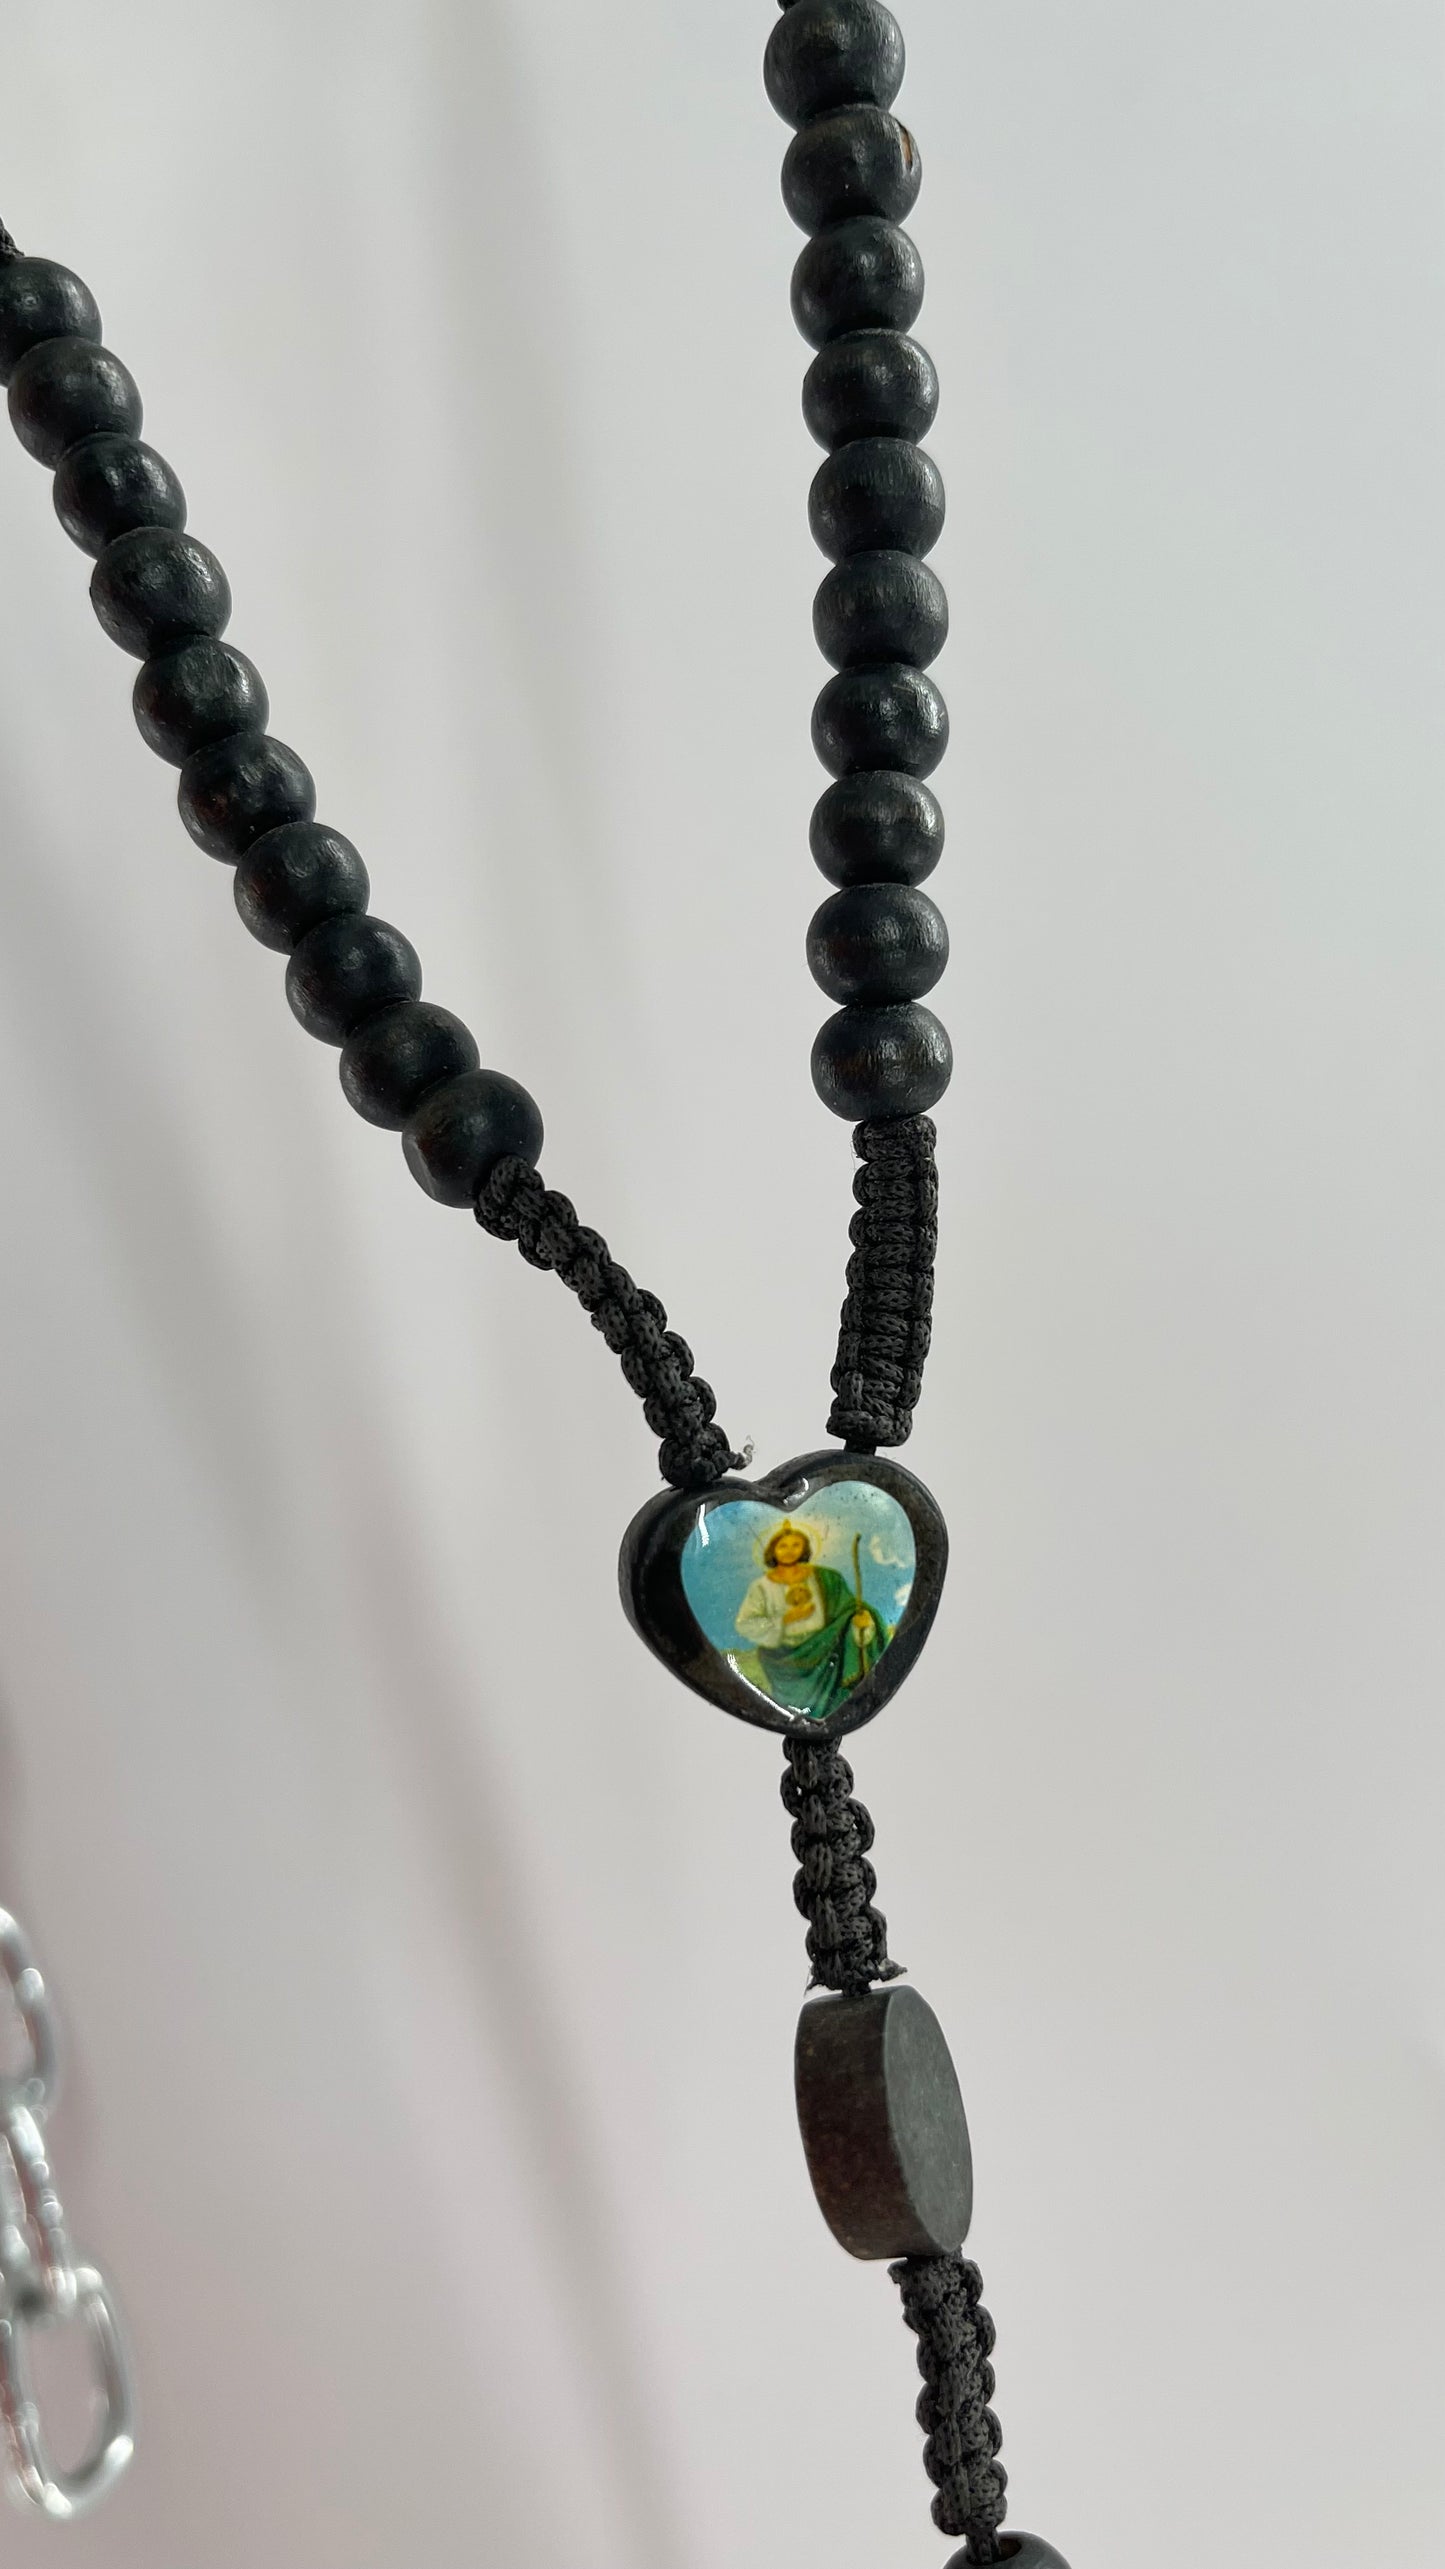 Vintage Black Rope Rosary Necklace Prayer Beads